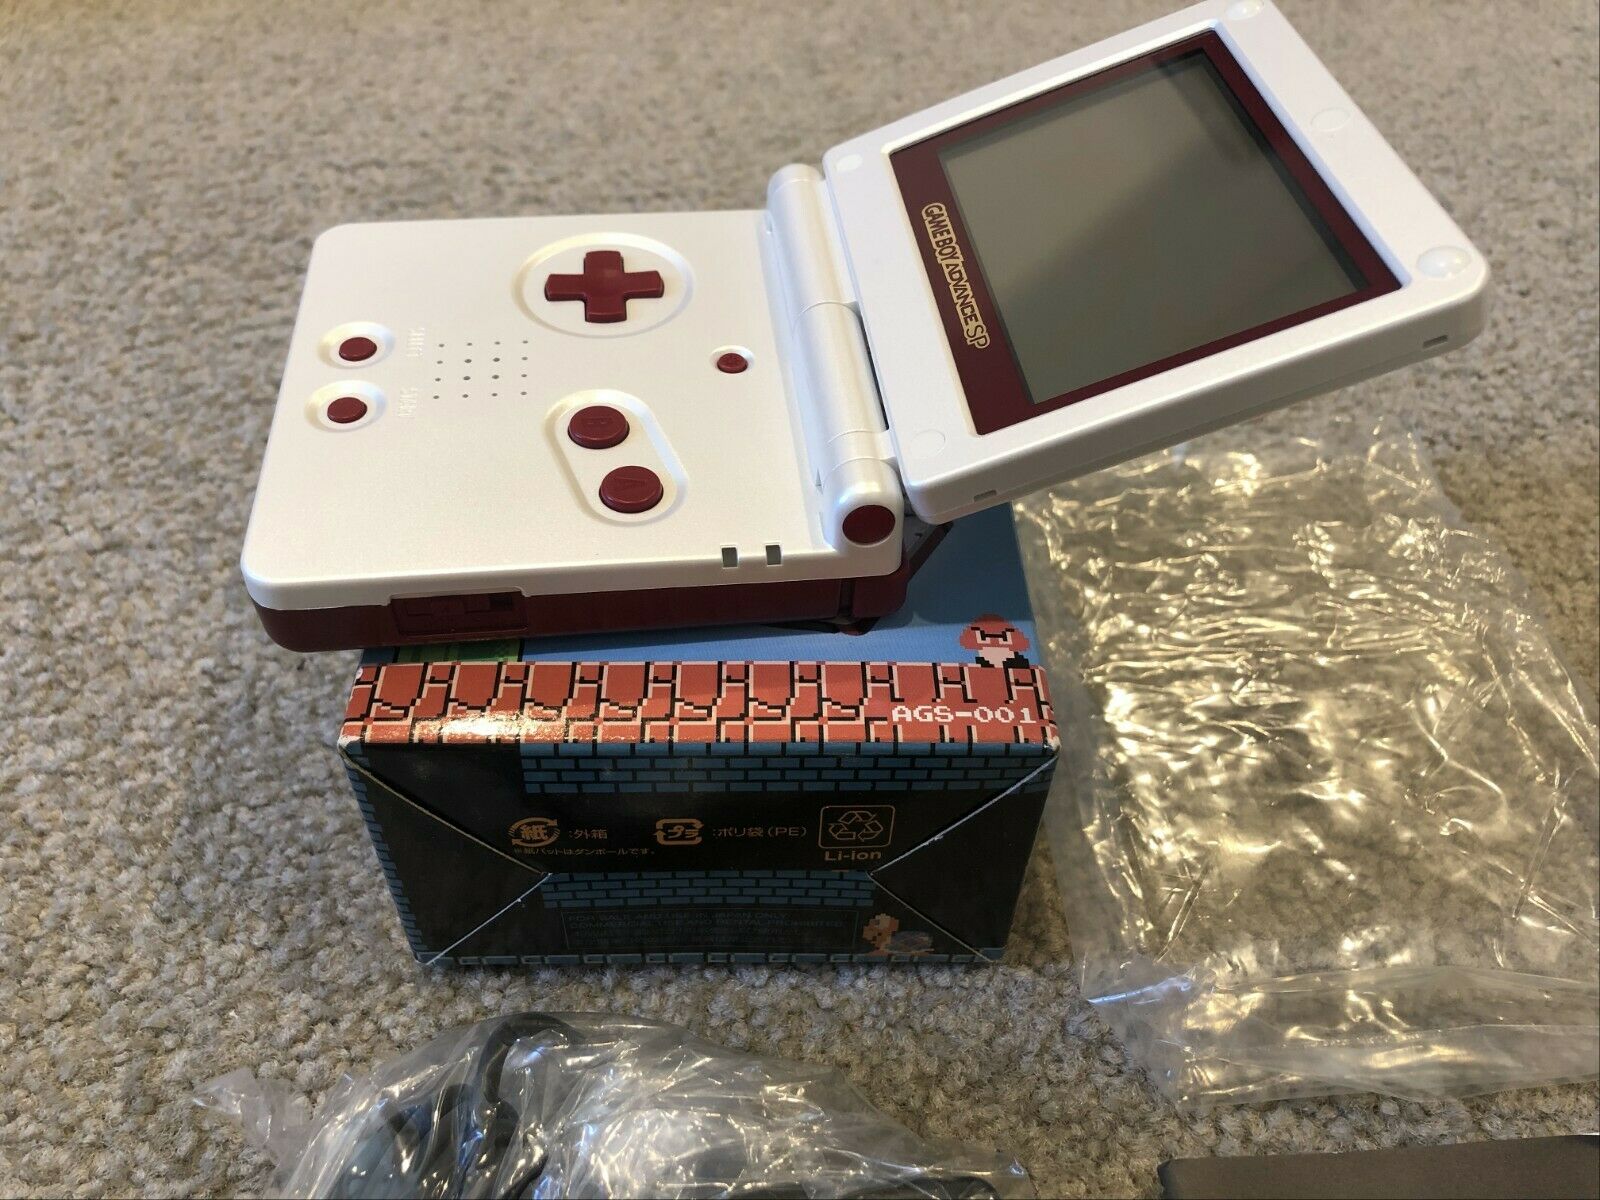 Game Boy Advance SP Famicom